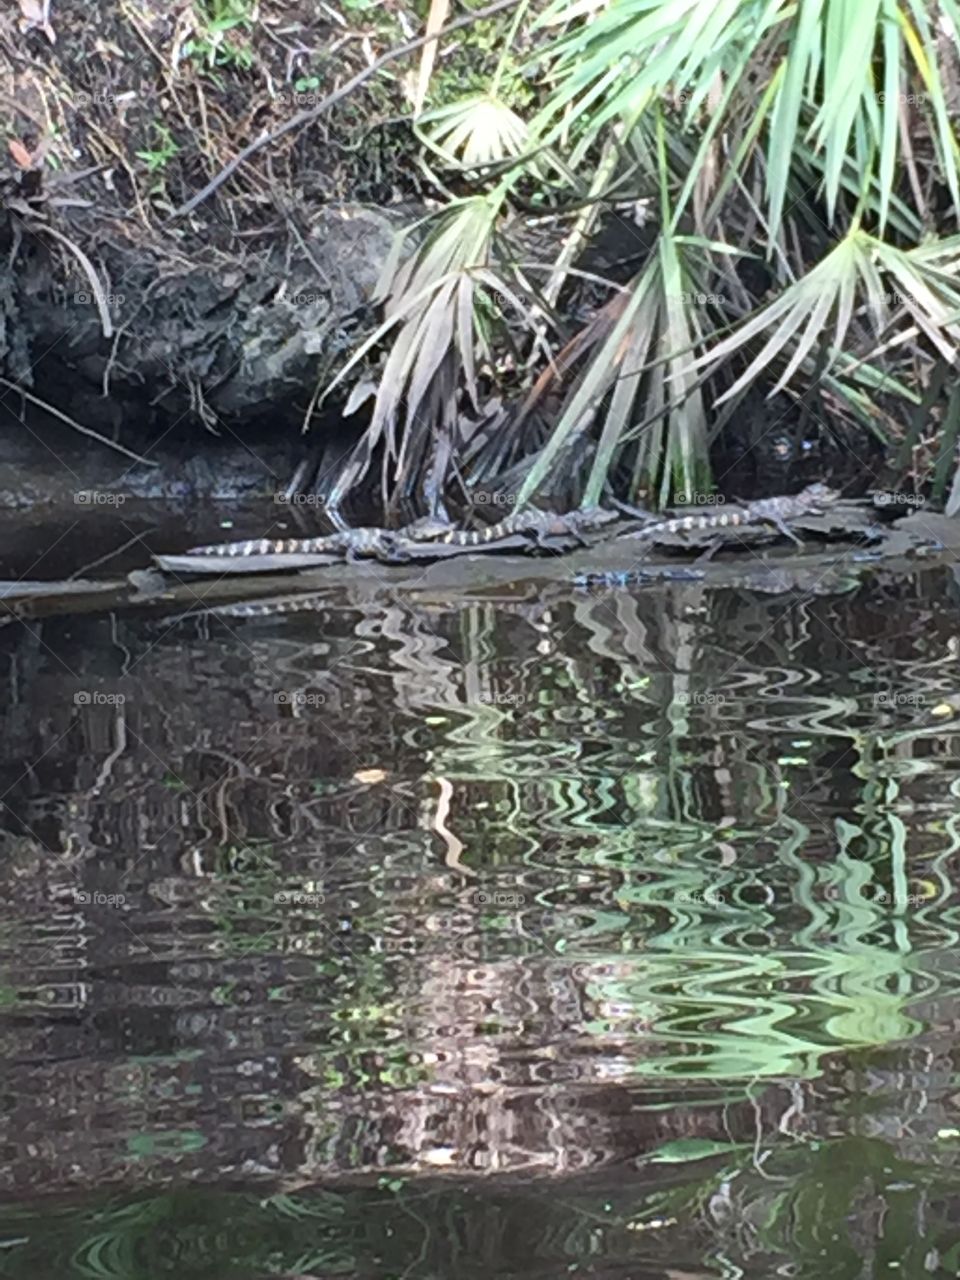 Alligator babies sunning